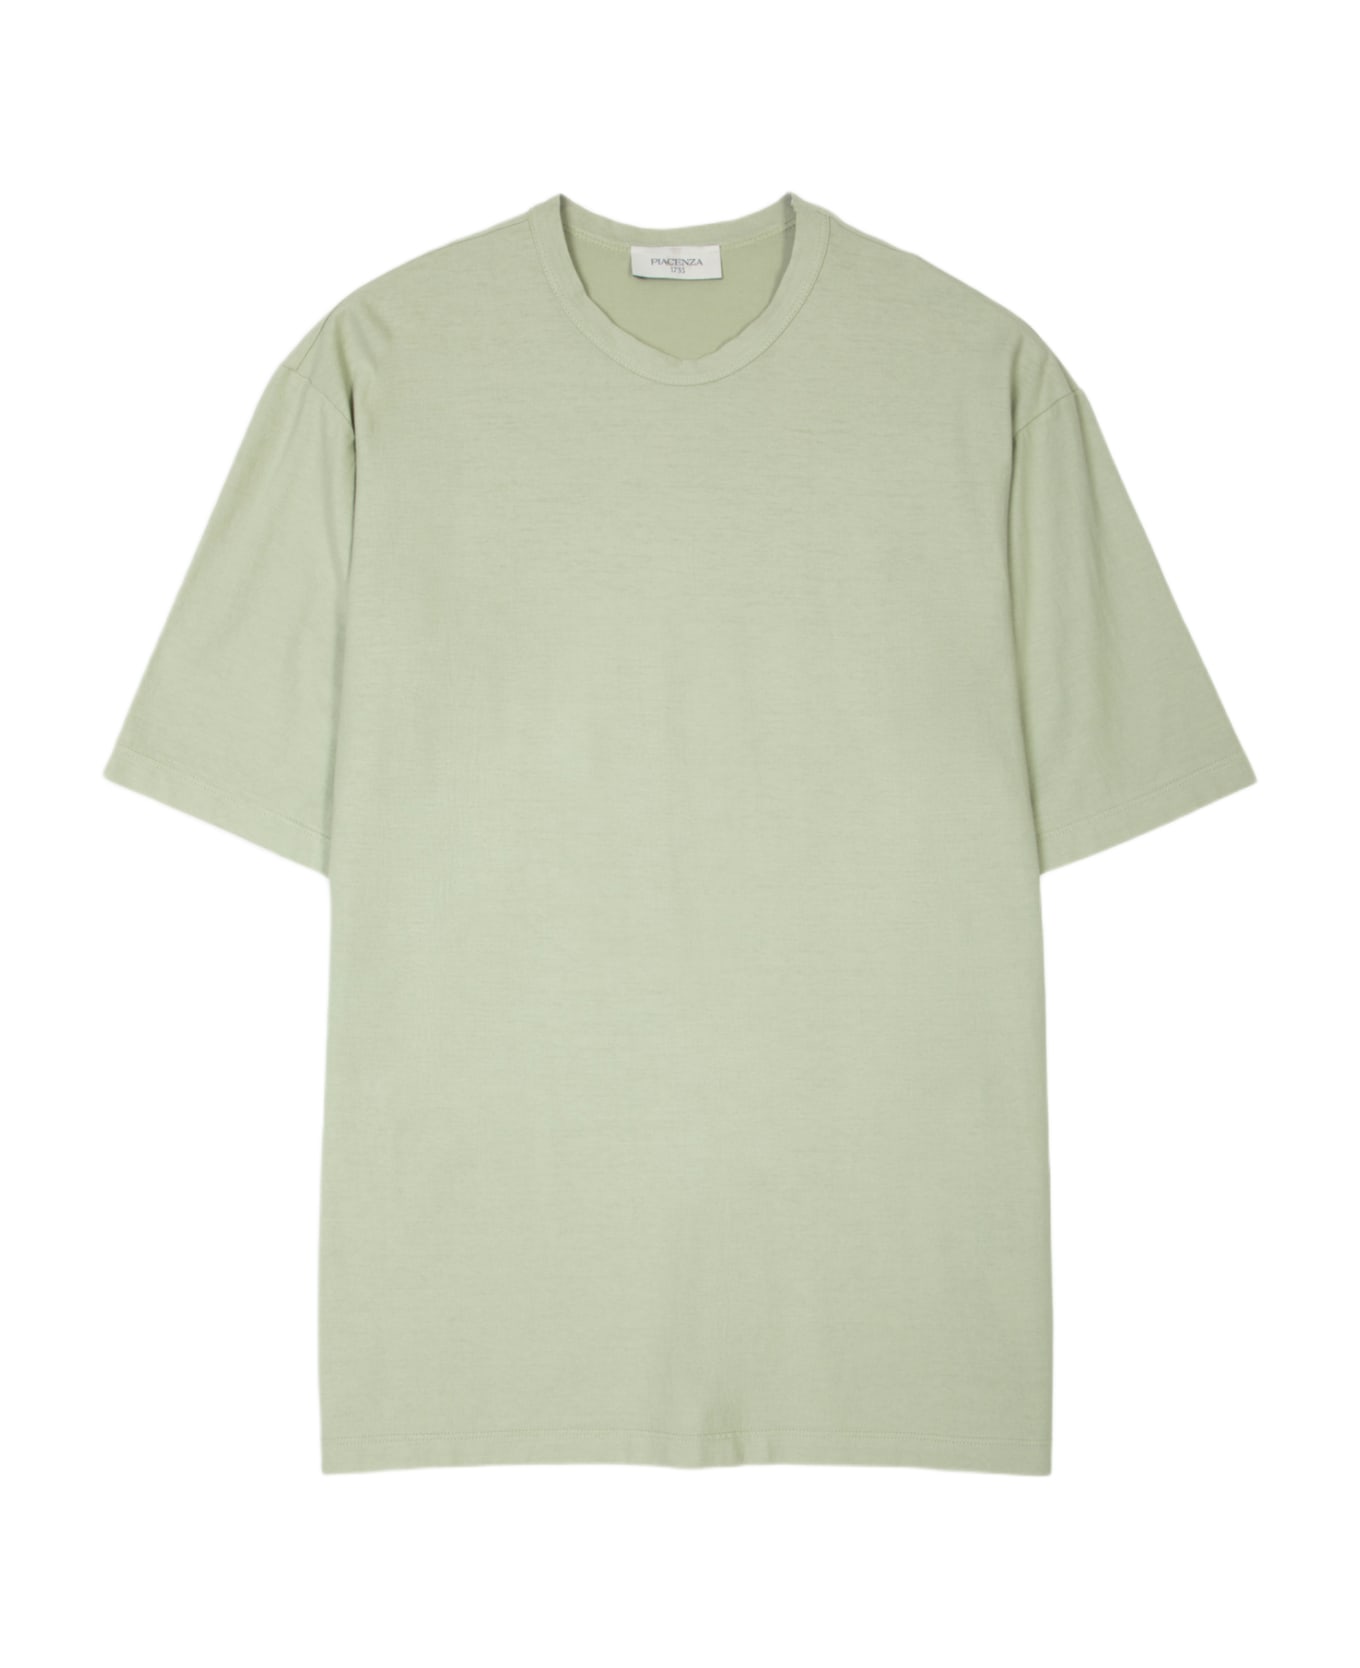 Piacenza Cashmere T-shirt Sage green lightweight cotton t-shirt - Salvia